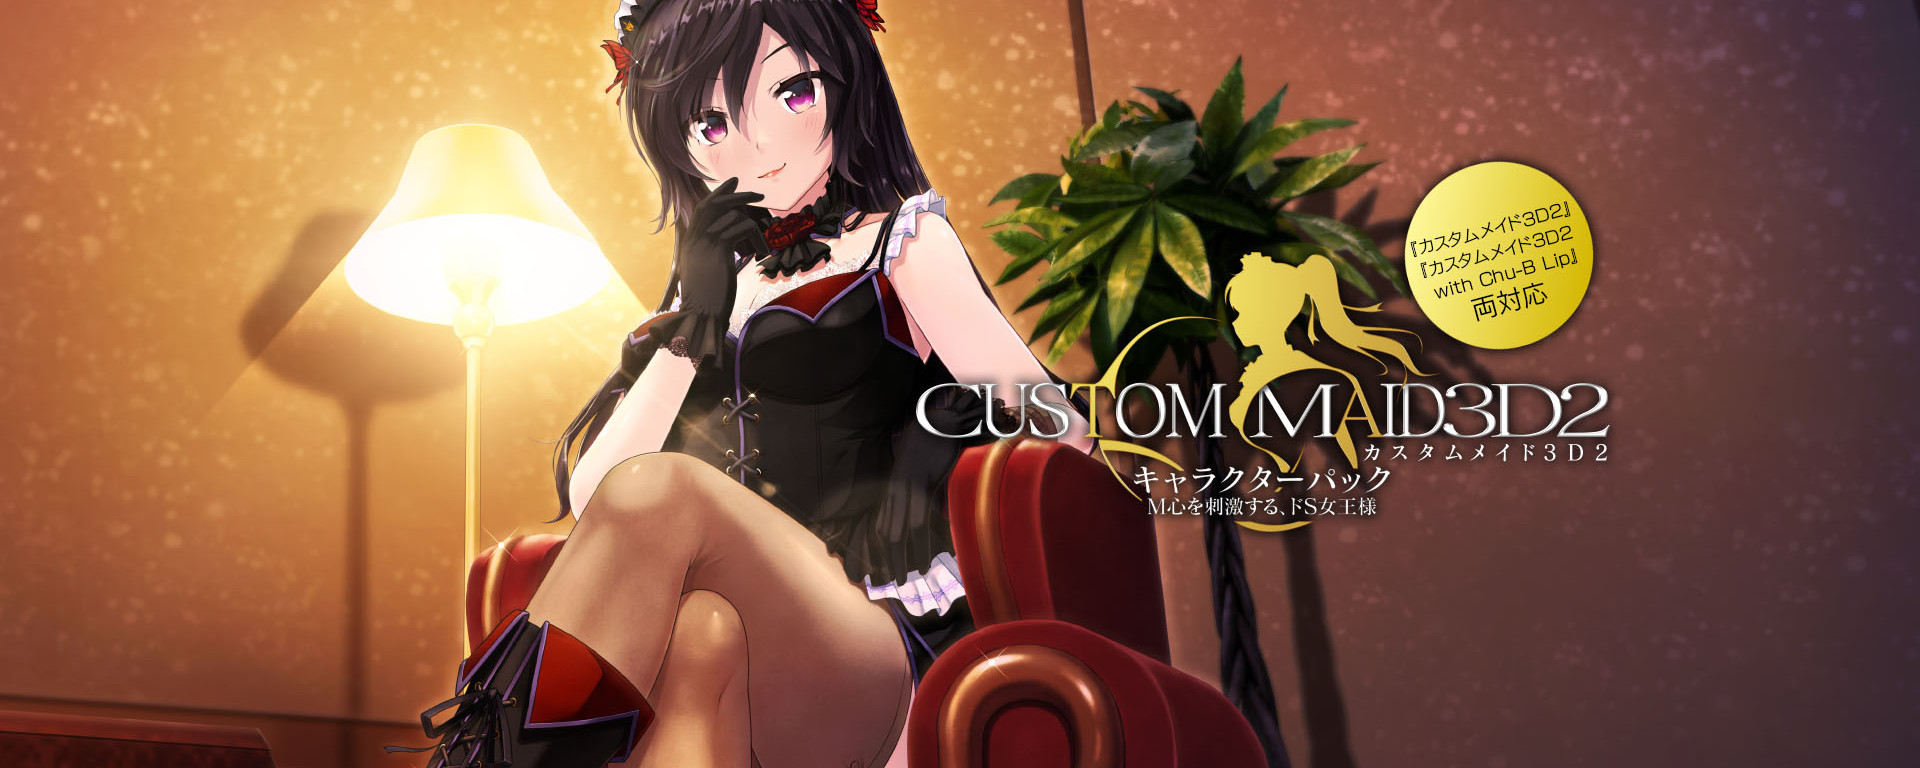 Custom Maid 3d 2 Dlc Download